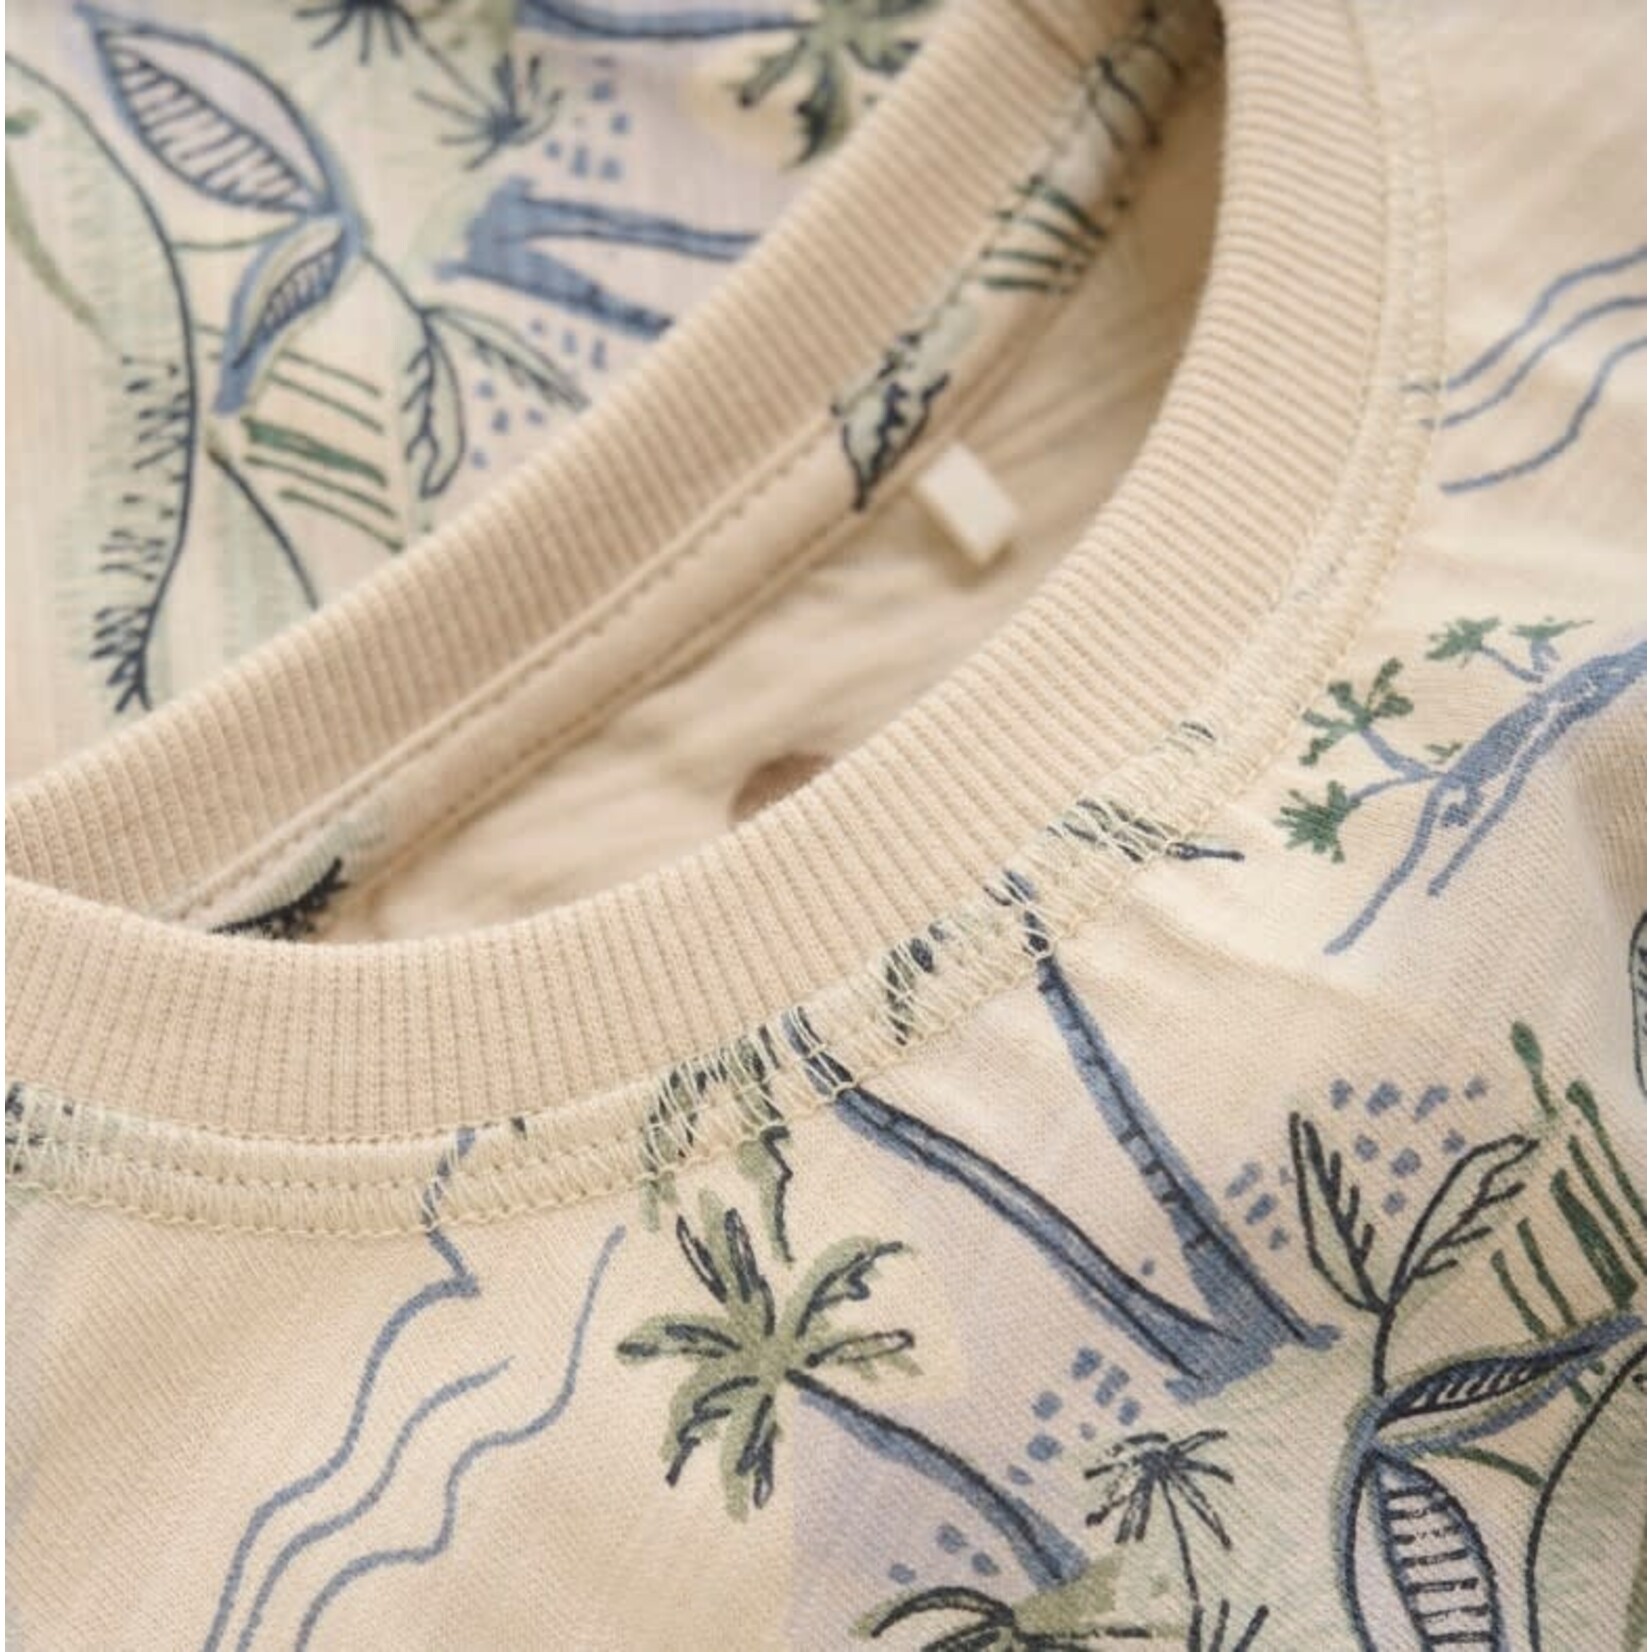 Enfant ENFANT - Shortsleeve t-shirt with allover palmtree print